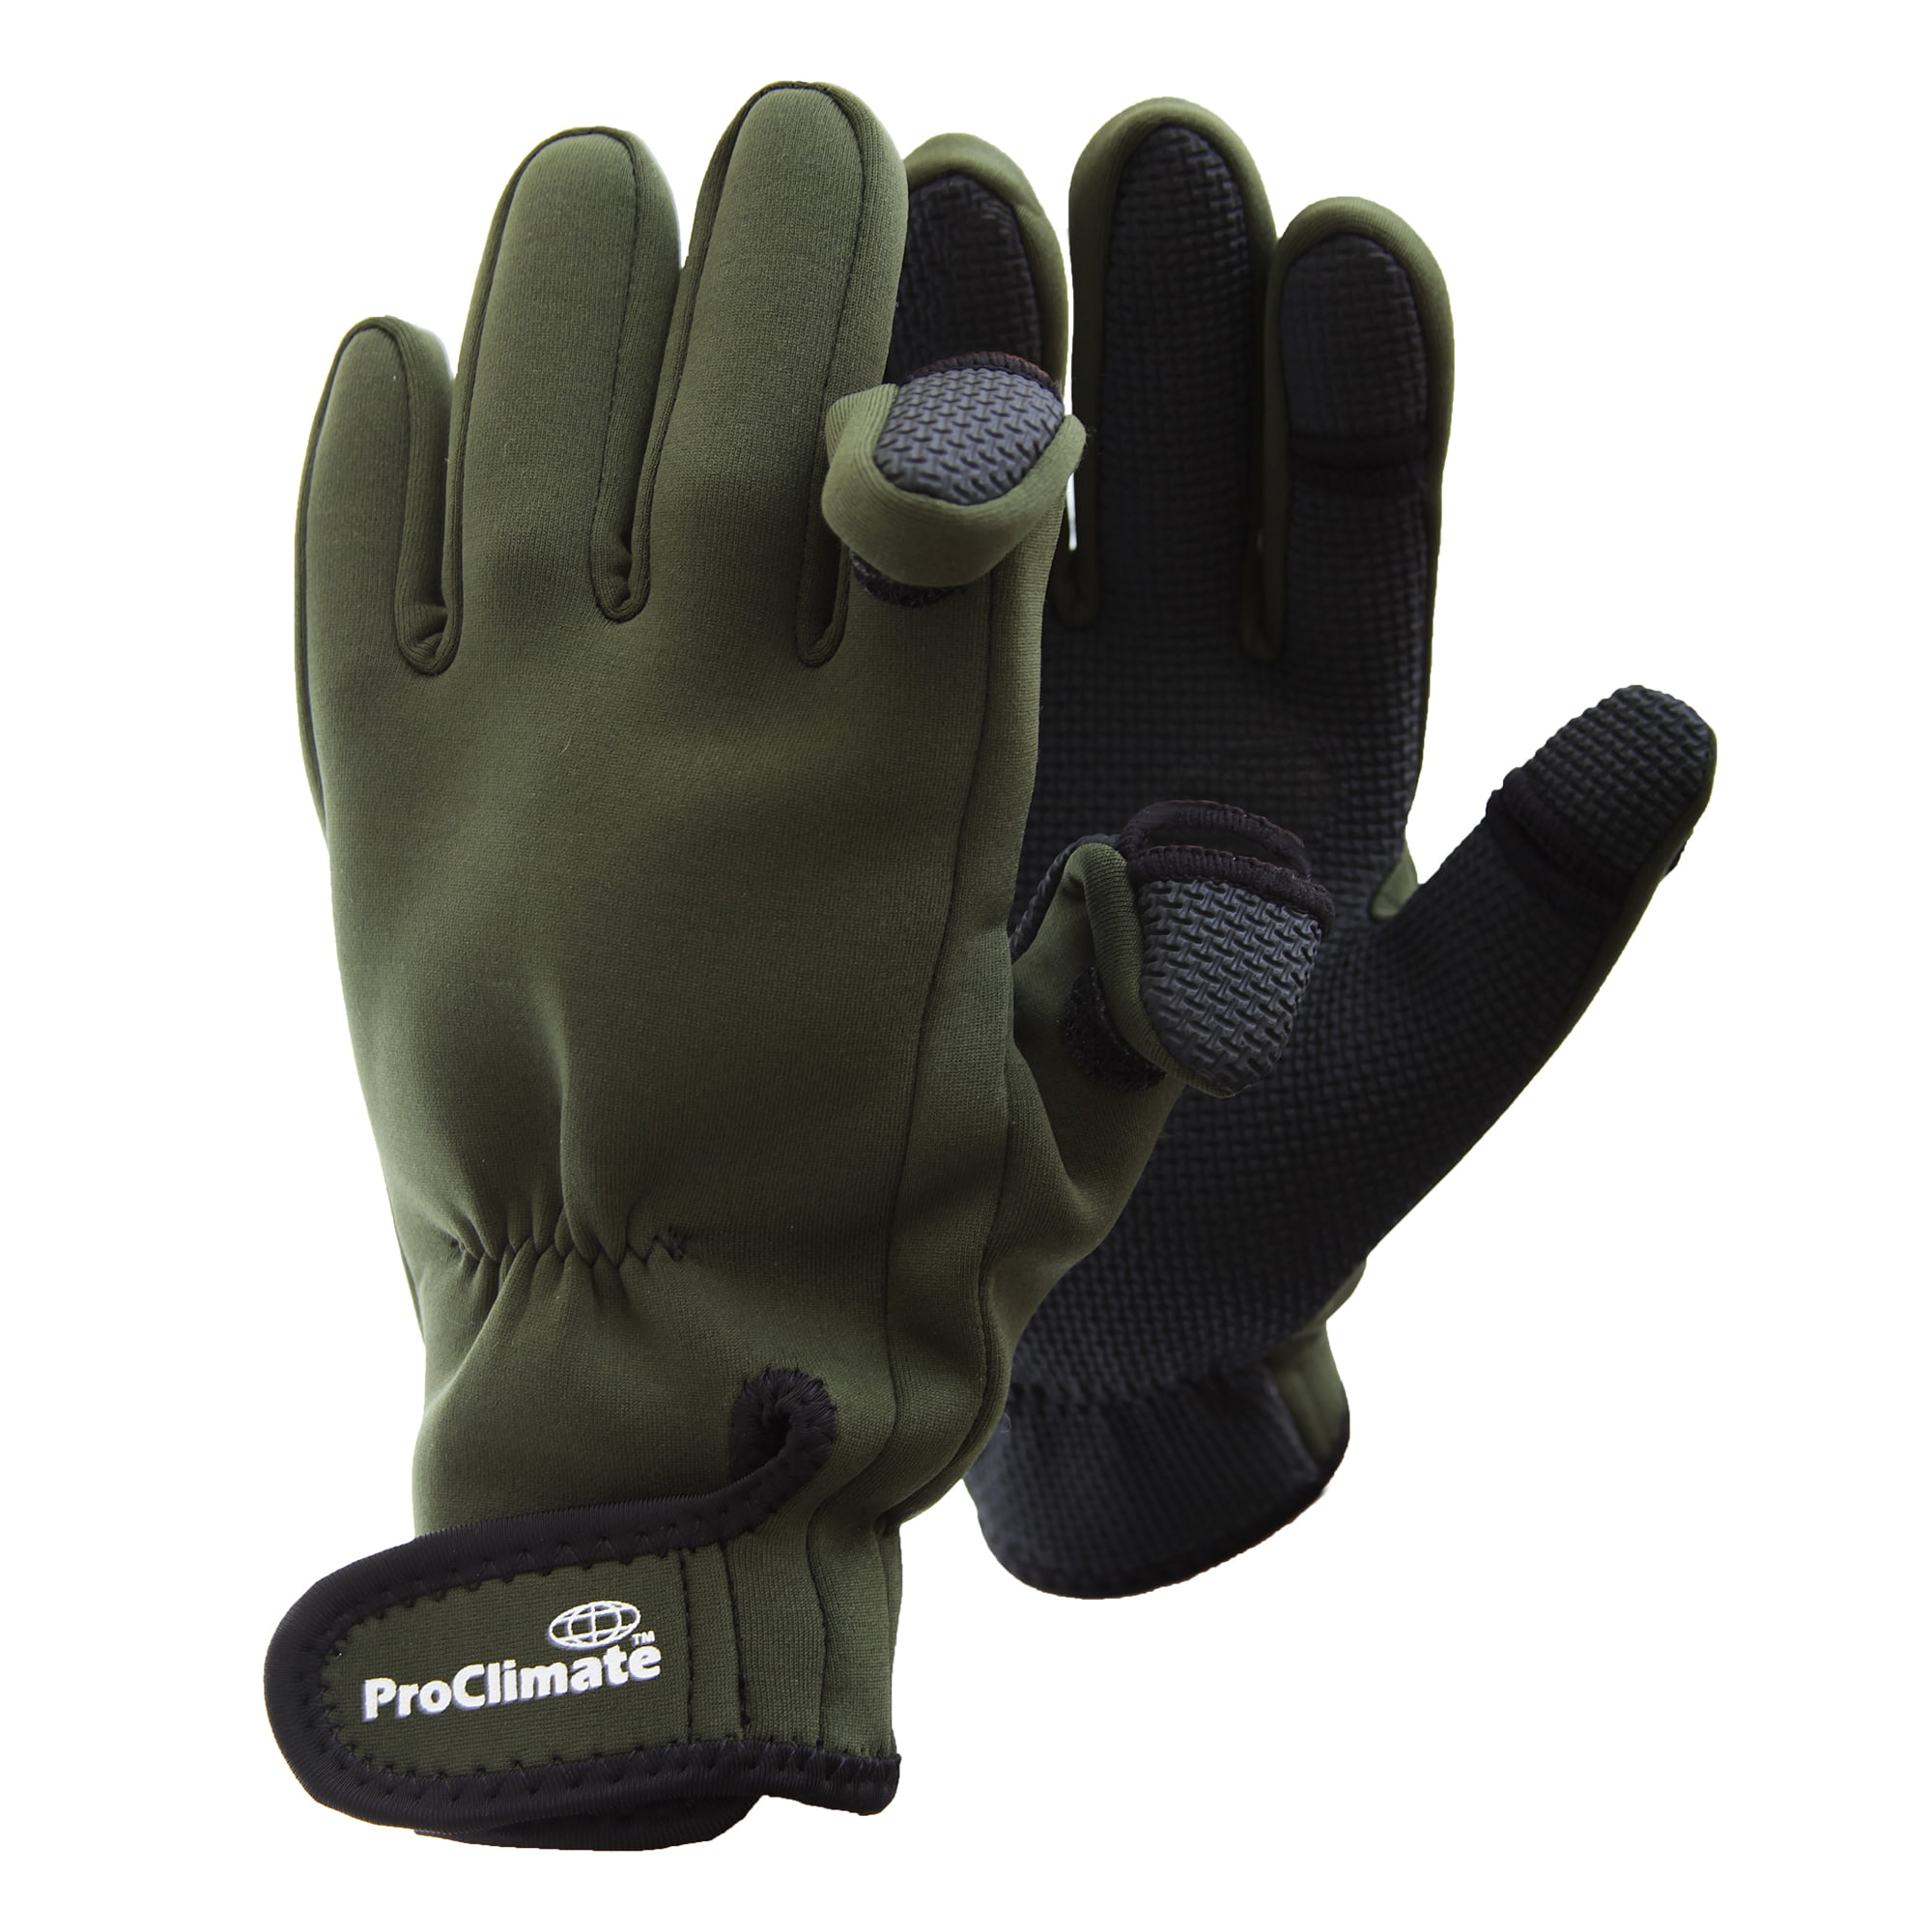 Pro Climate Neoprene Fishing Hunting Shooting Sports Gloves Fold Back Fingers 